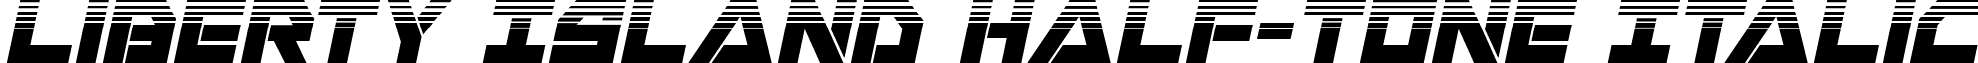 Liberty Island Half-Tone Italic font - libertyislandhalfital.ttf